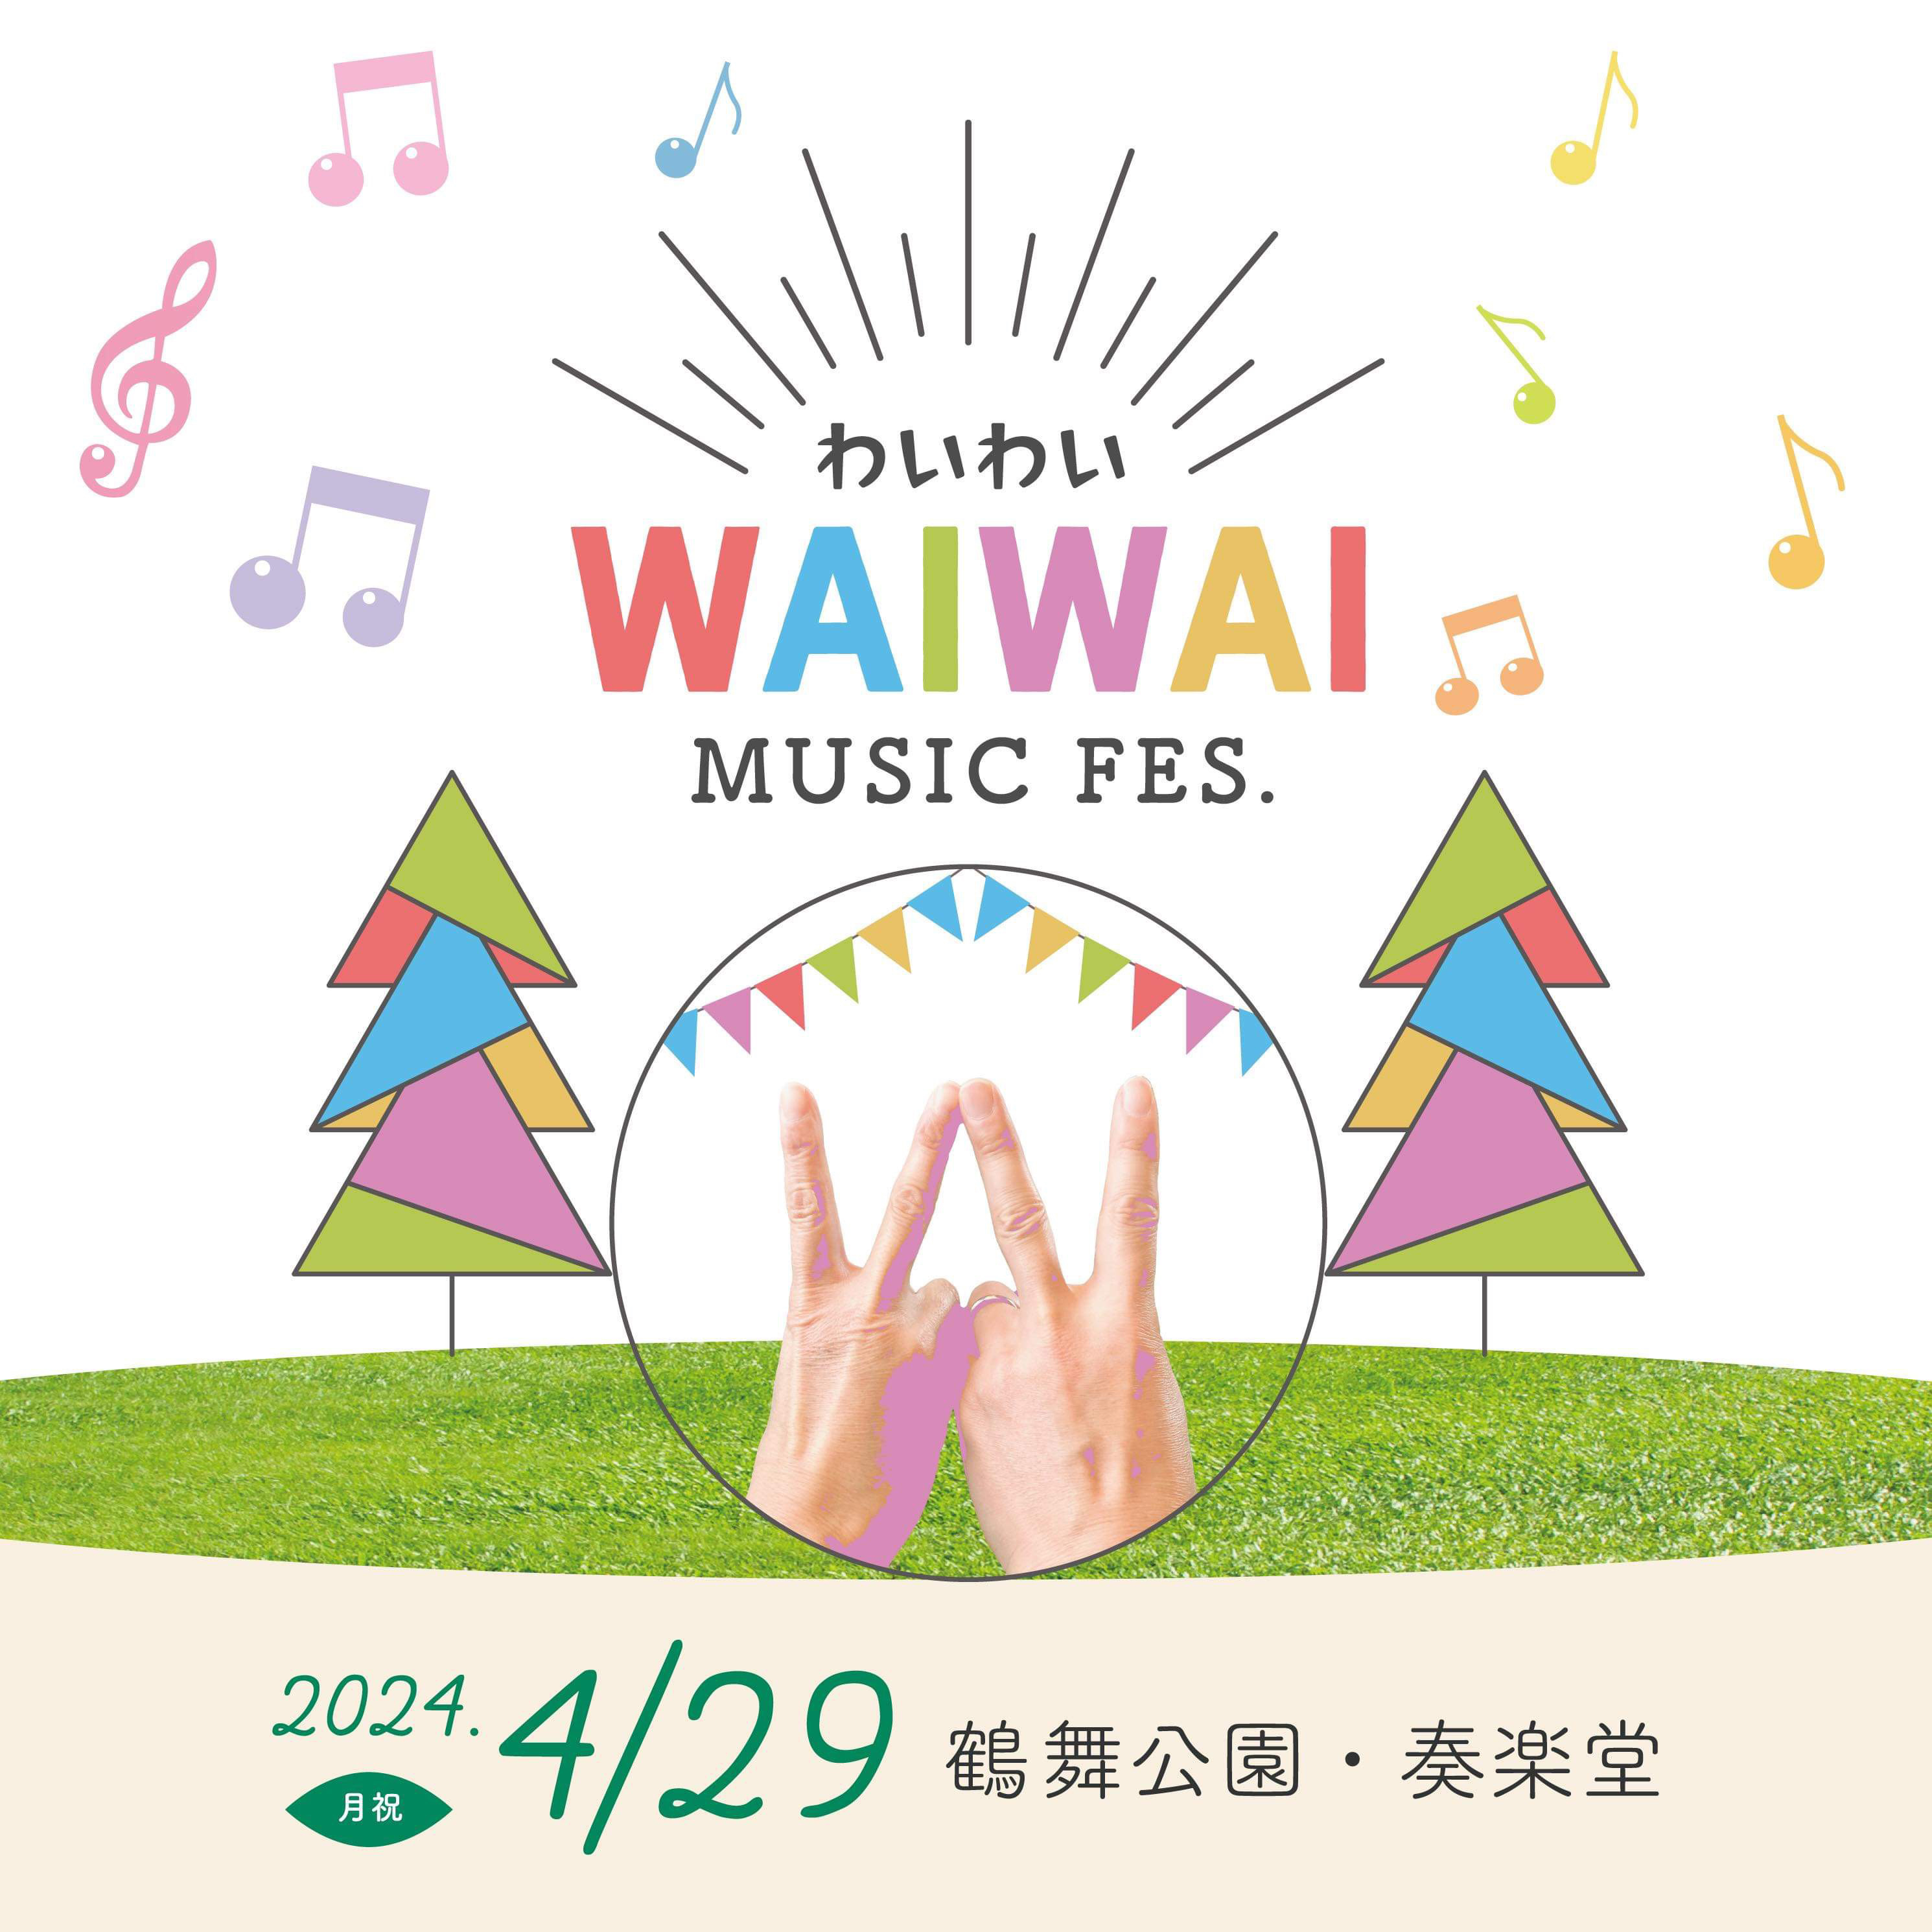 WAIWAI MUSIC FEA.